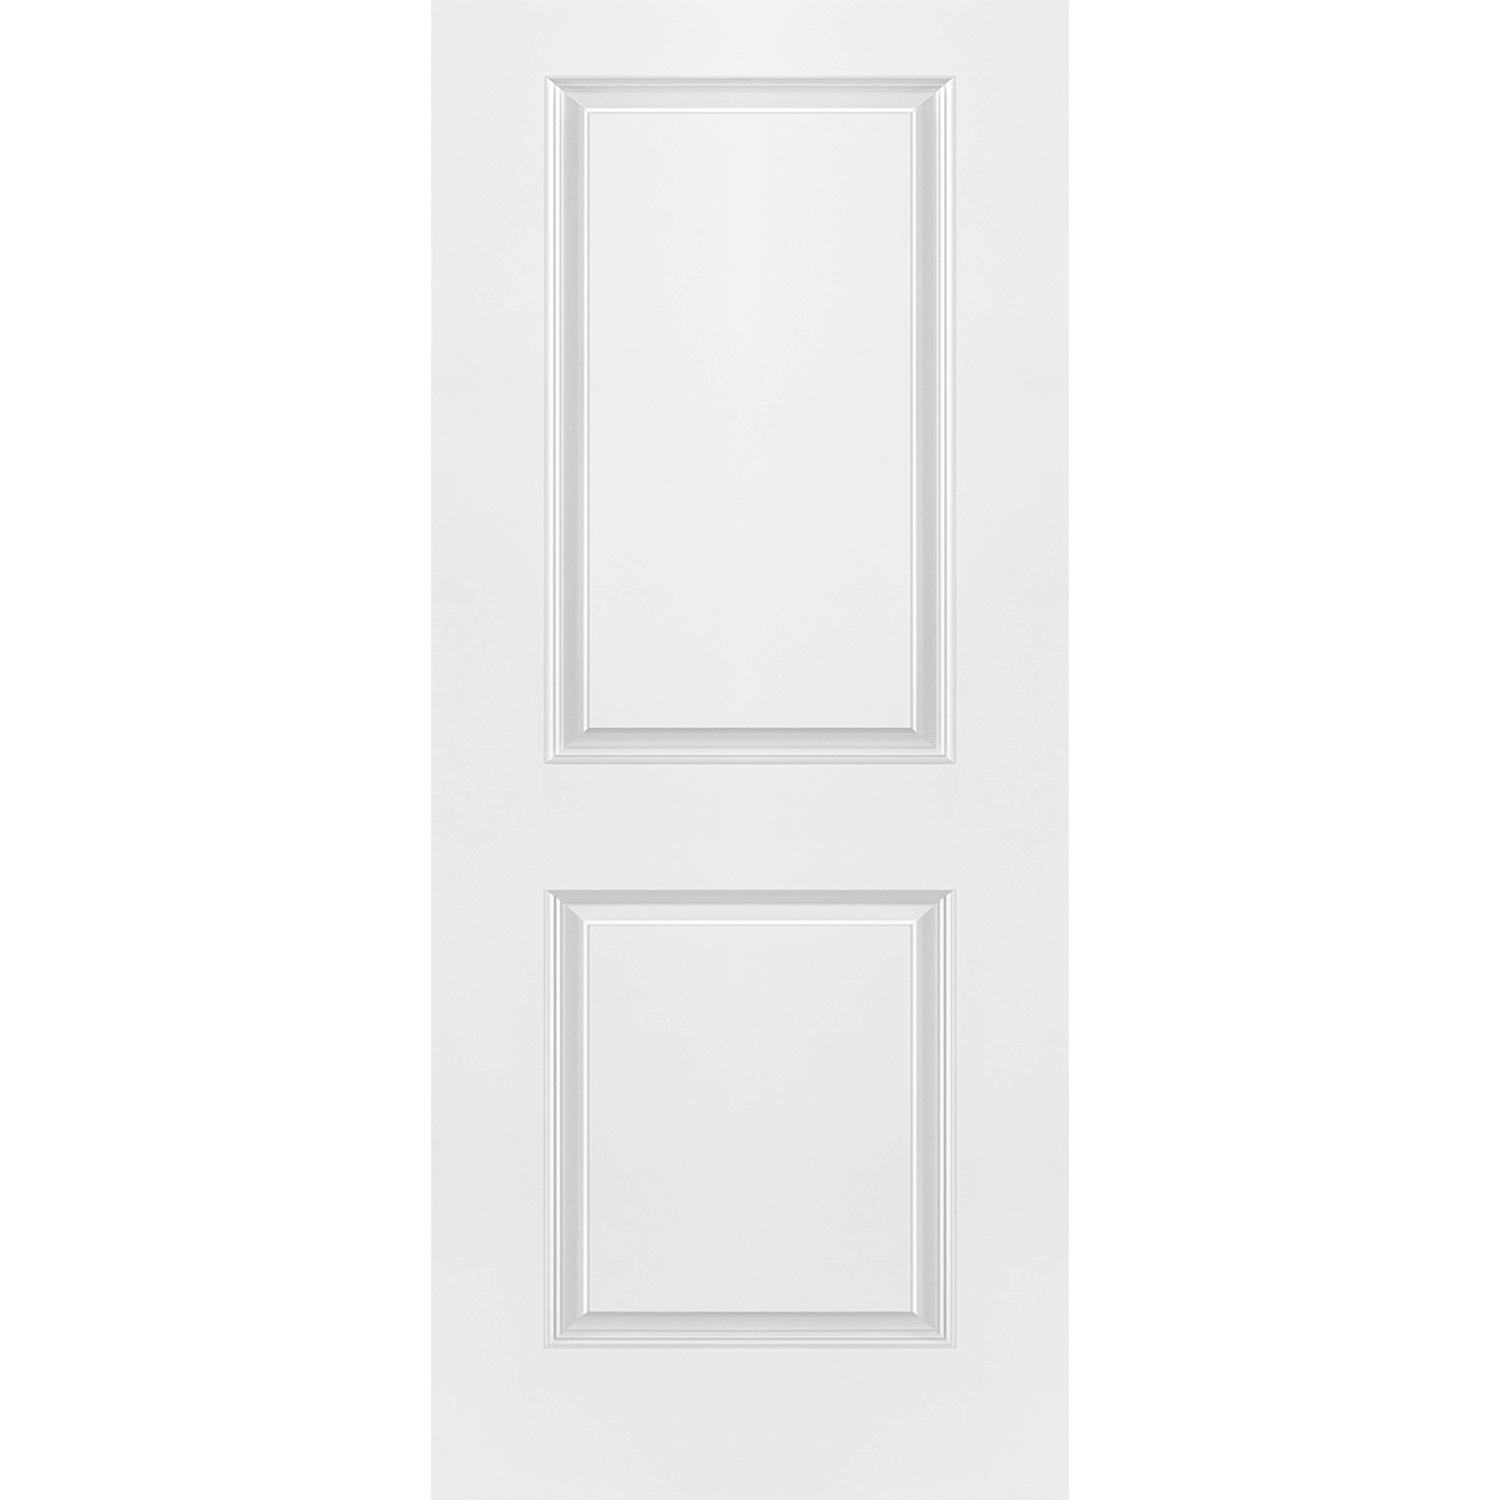 2 Panel 80 x 34 x 1-3/8 Smooth Hollow Door Raised